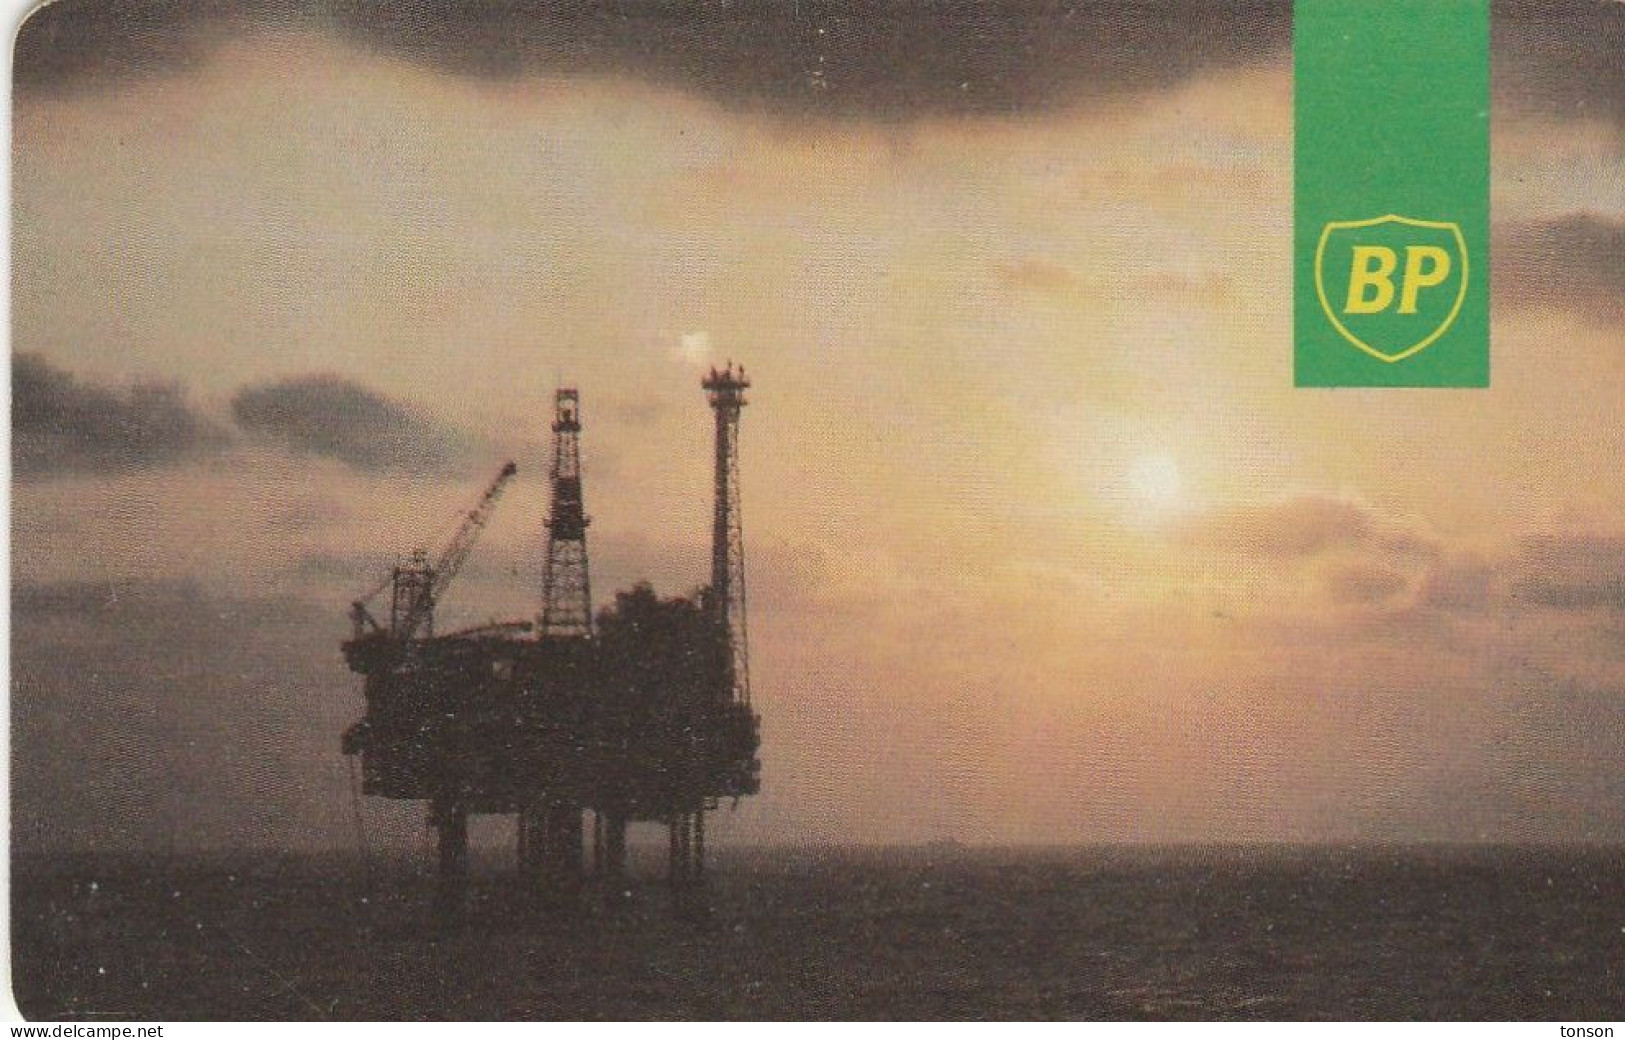 UK Oil Rig Phonecard - BP, GB-OIL-AUT-0001, BP (Blue IPL Logo), 20 Units, 2 Scans. - Boorplatformen